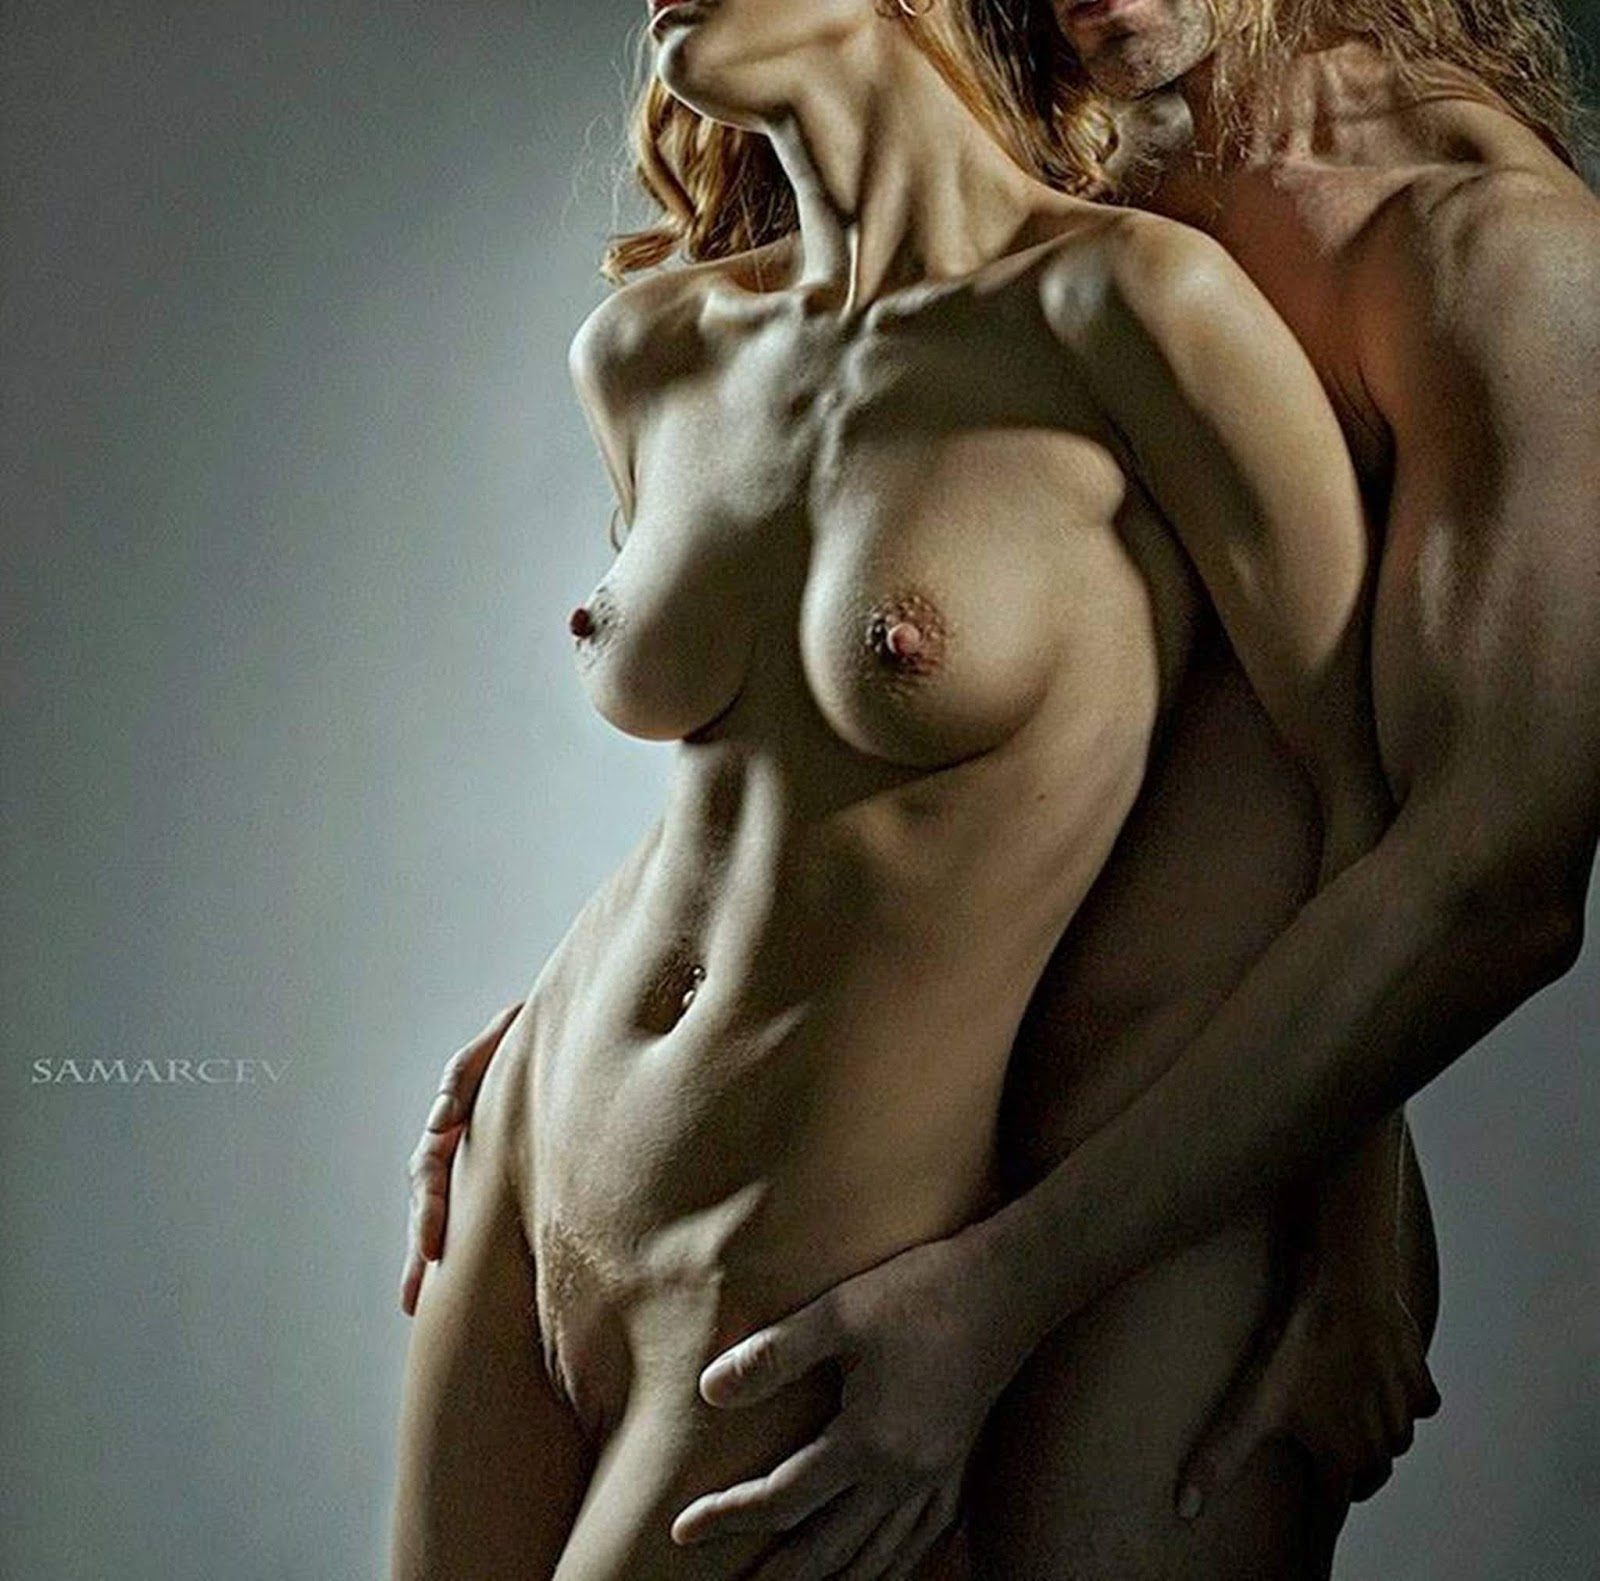 мужчина и женщина позируют голыми фото 70